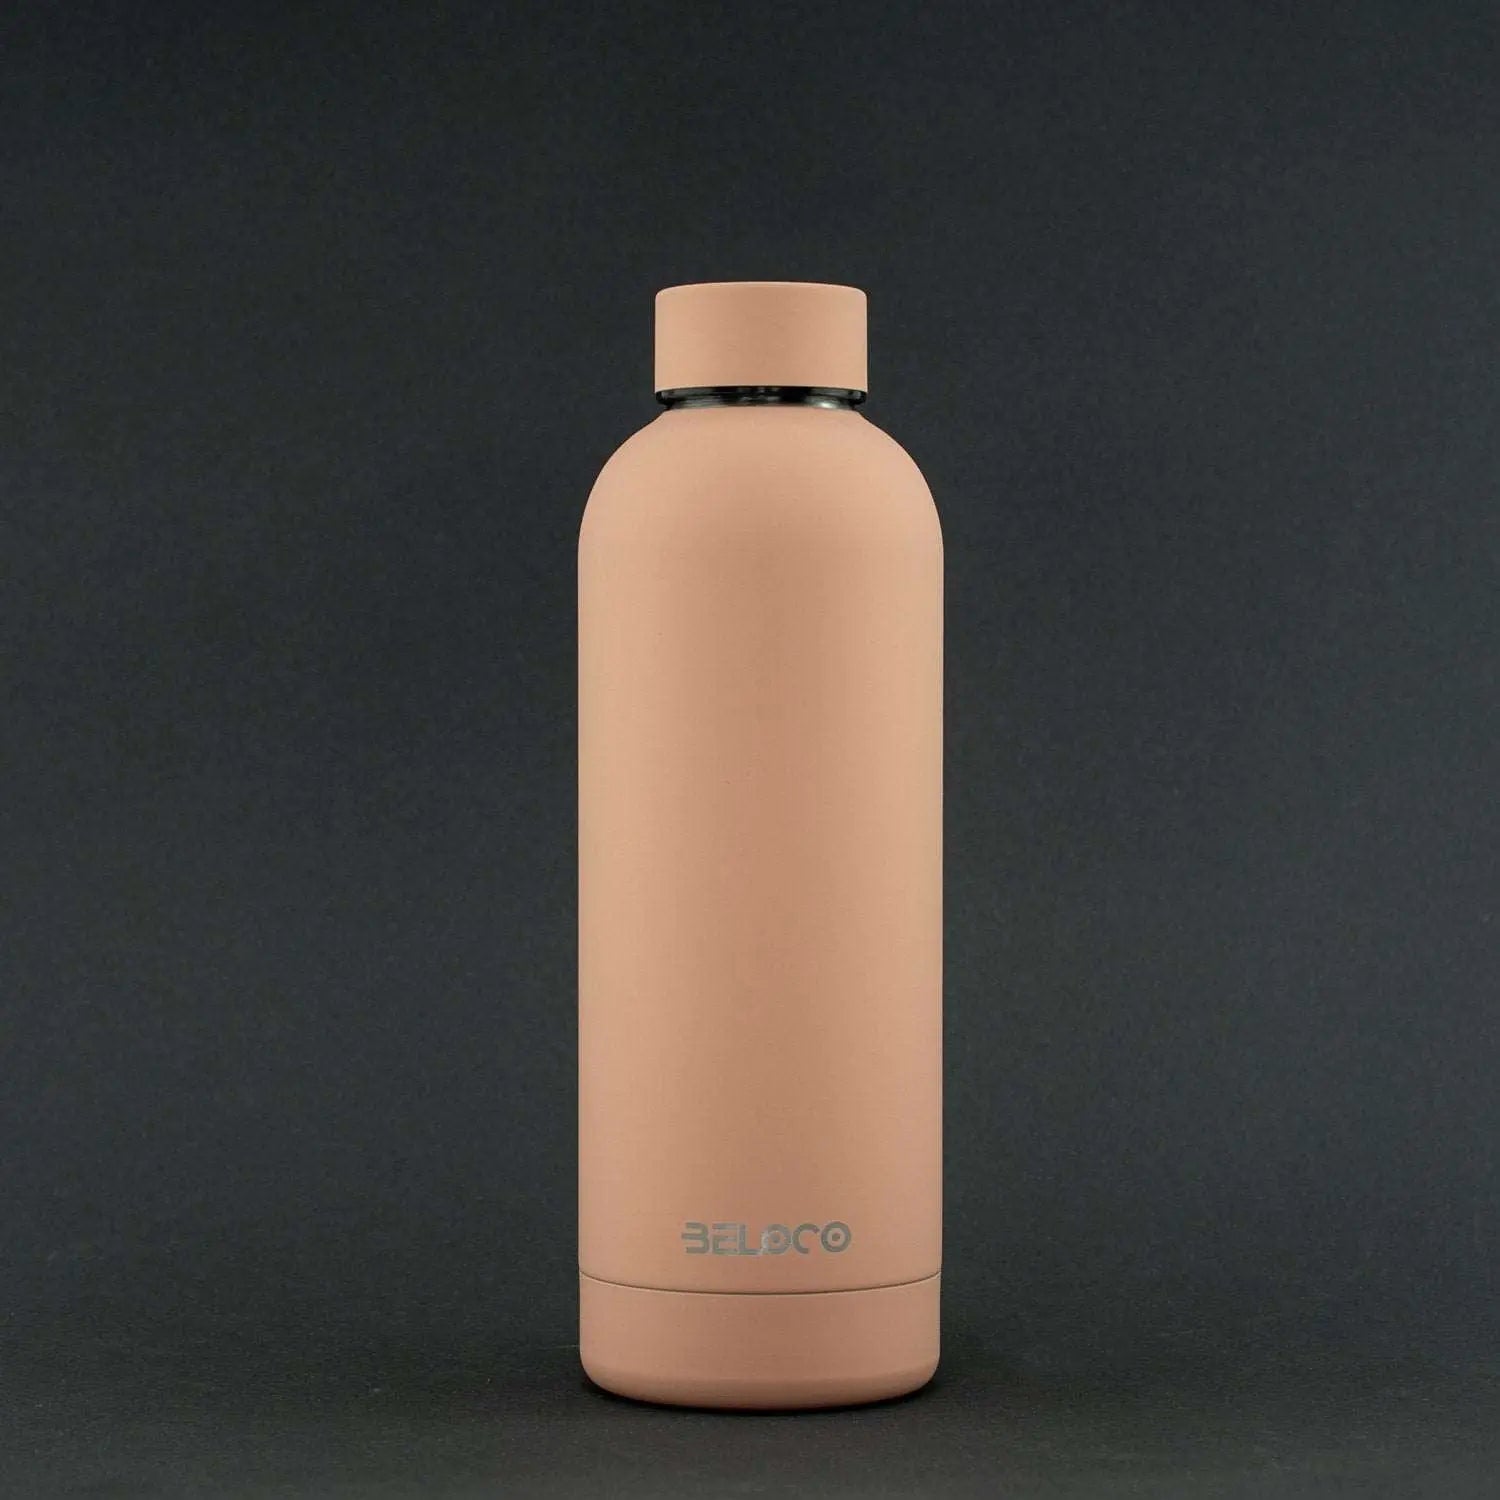 Classiq Rosa bottle - 500 ml - BeLoco